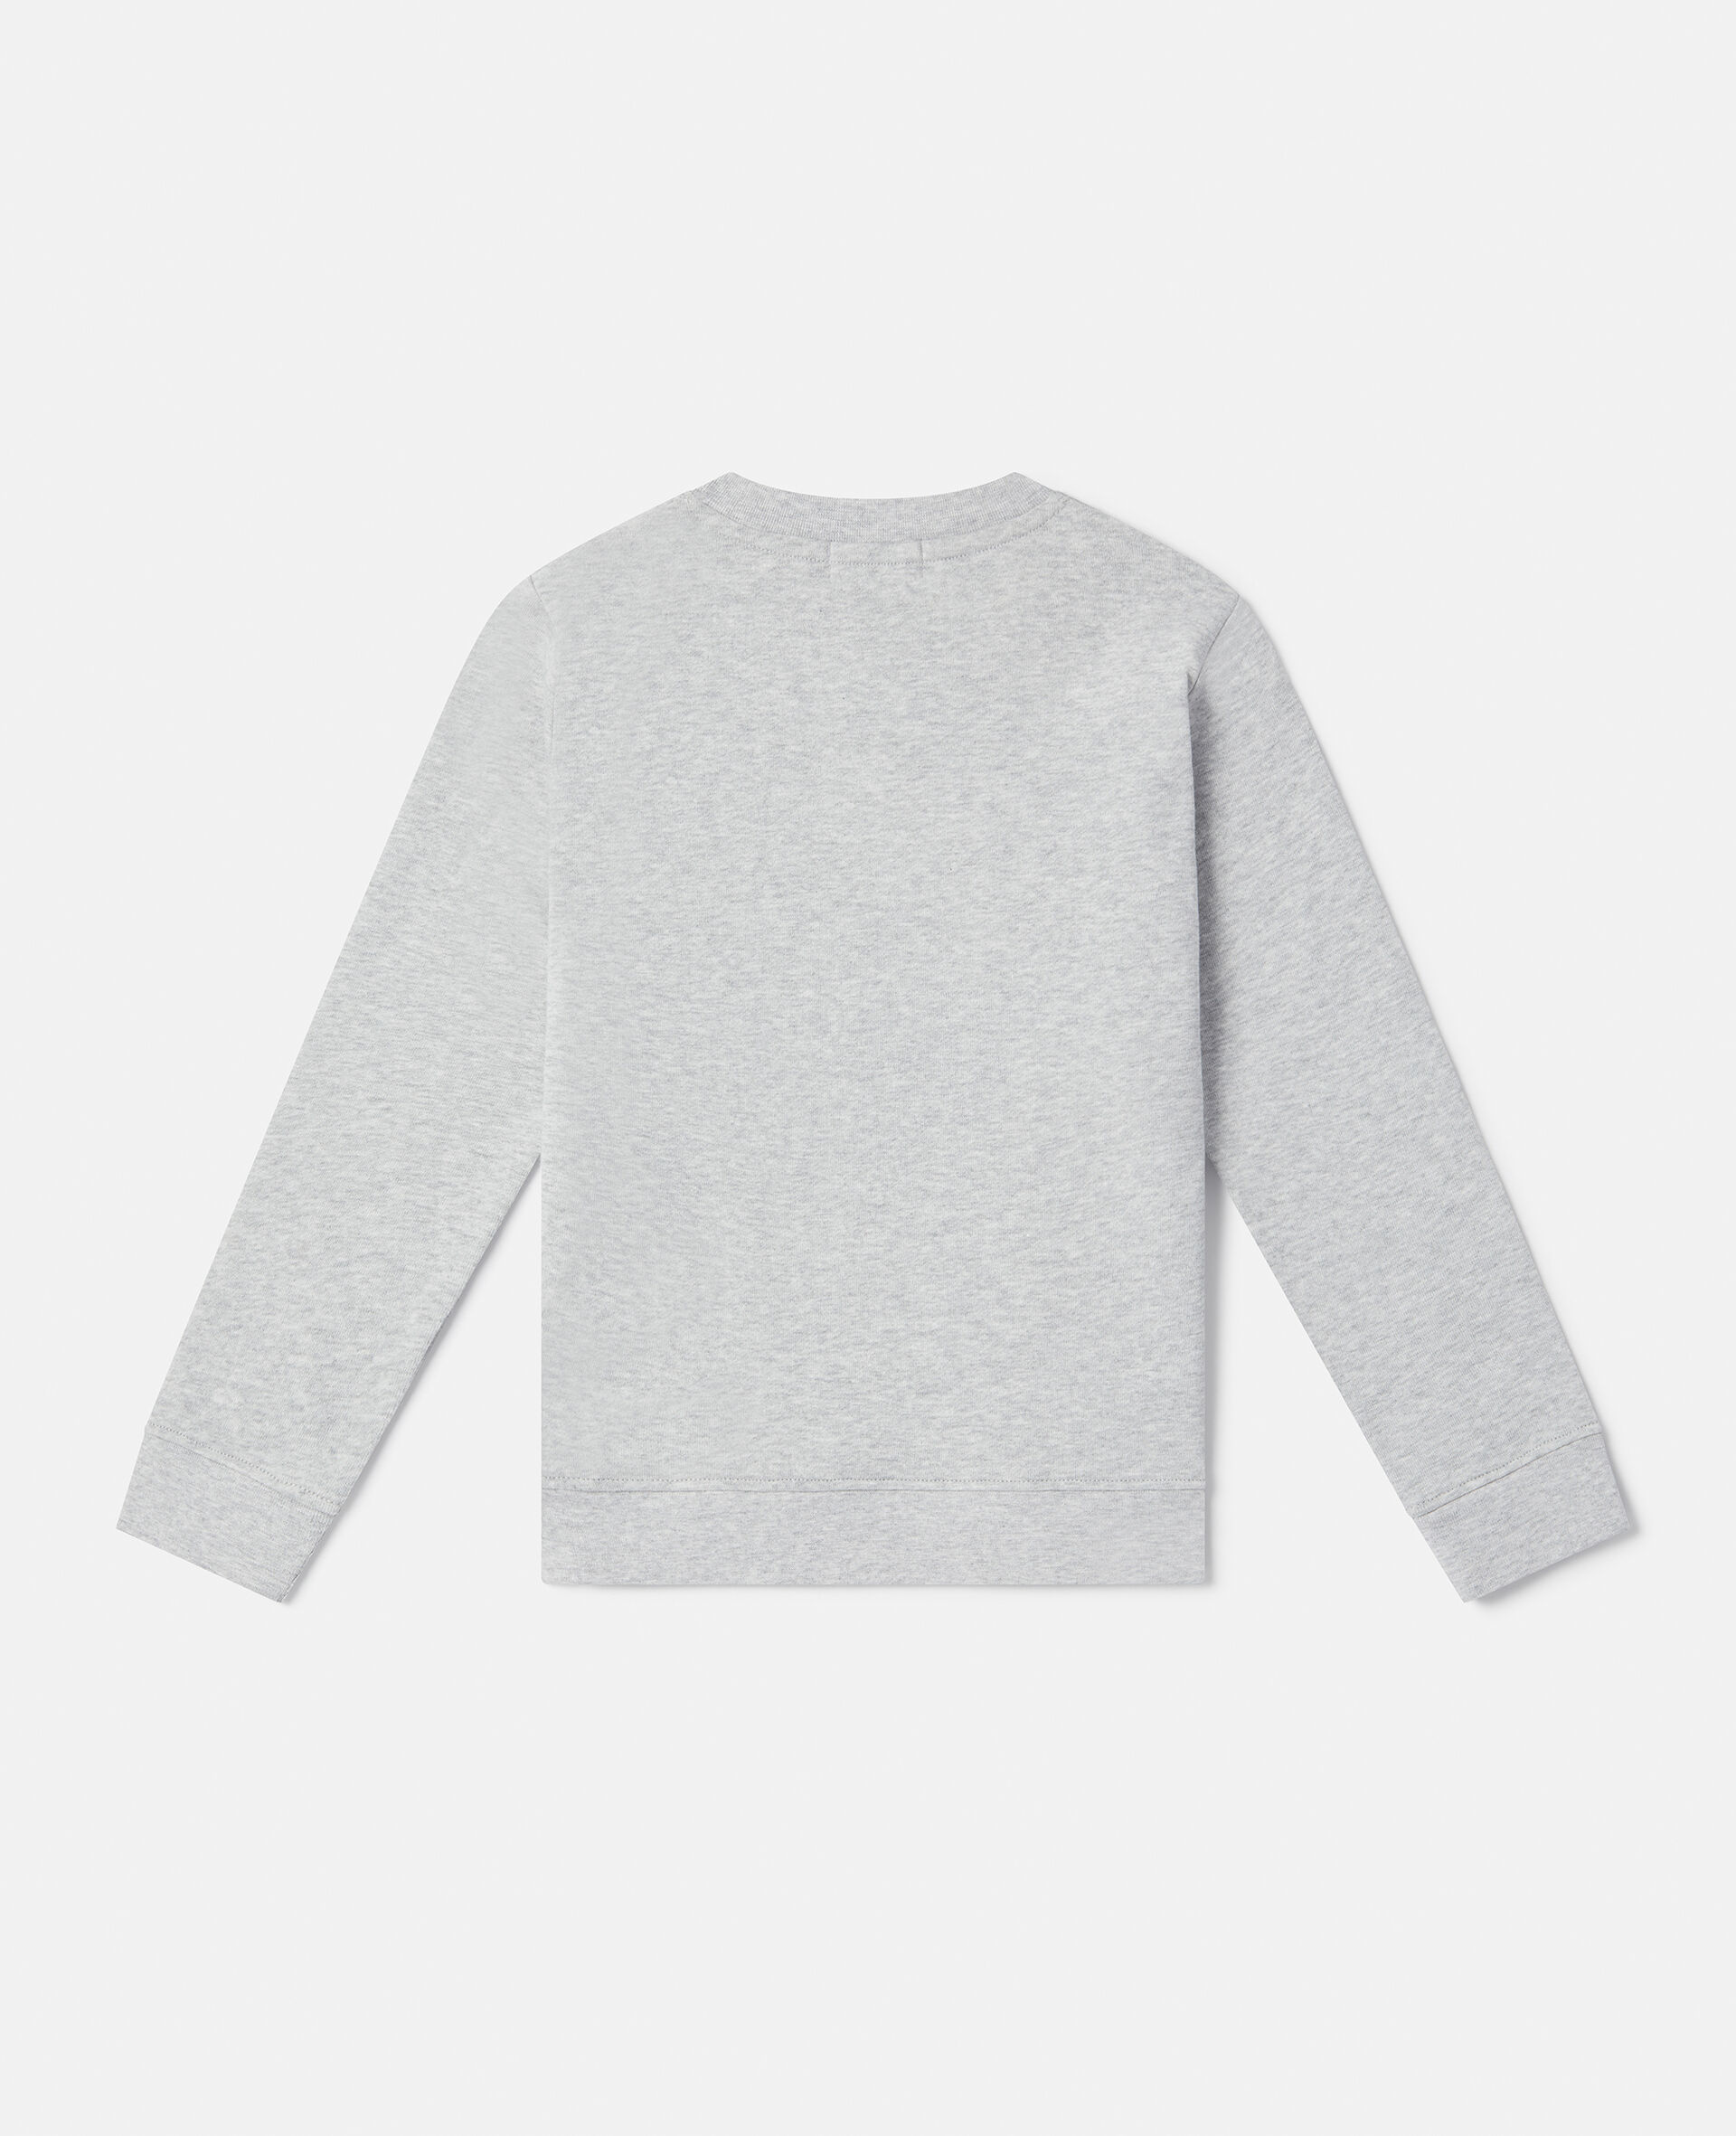 Funfair Embroidery Sweatshirt-Grey-large image number 2